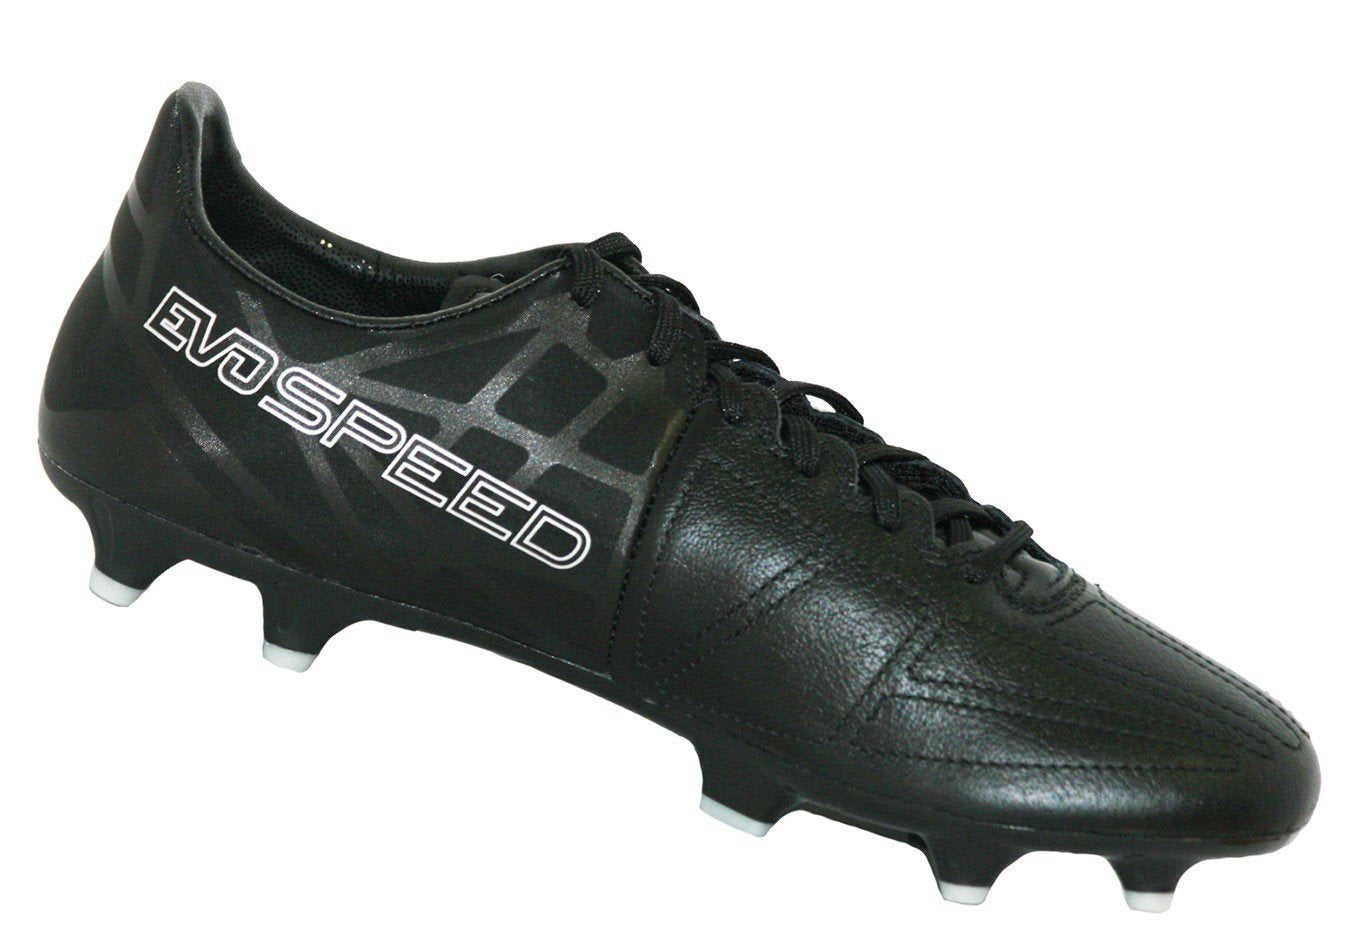 Puma evospeed 35lth fg-black/silver metallic men's Football Boots size 6,7,8,8.5,9,9.5,10,11